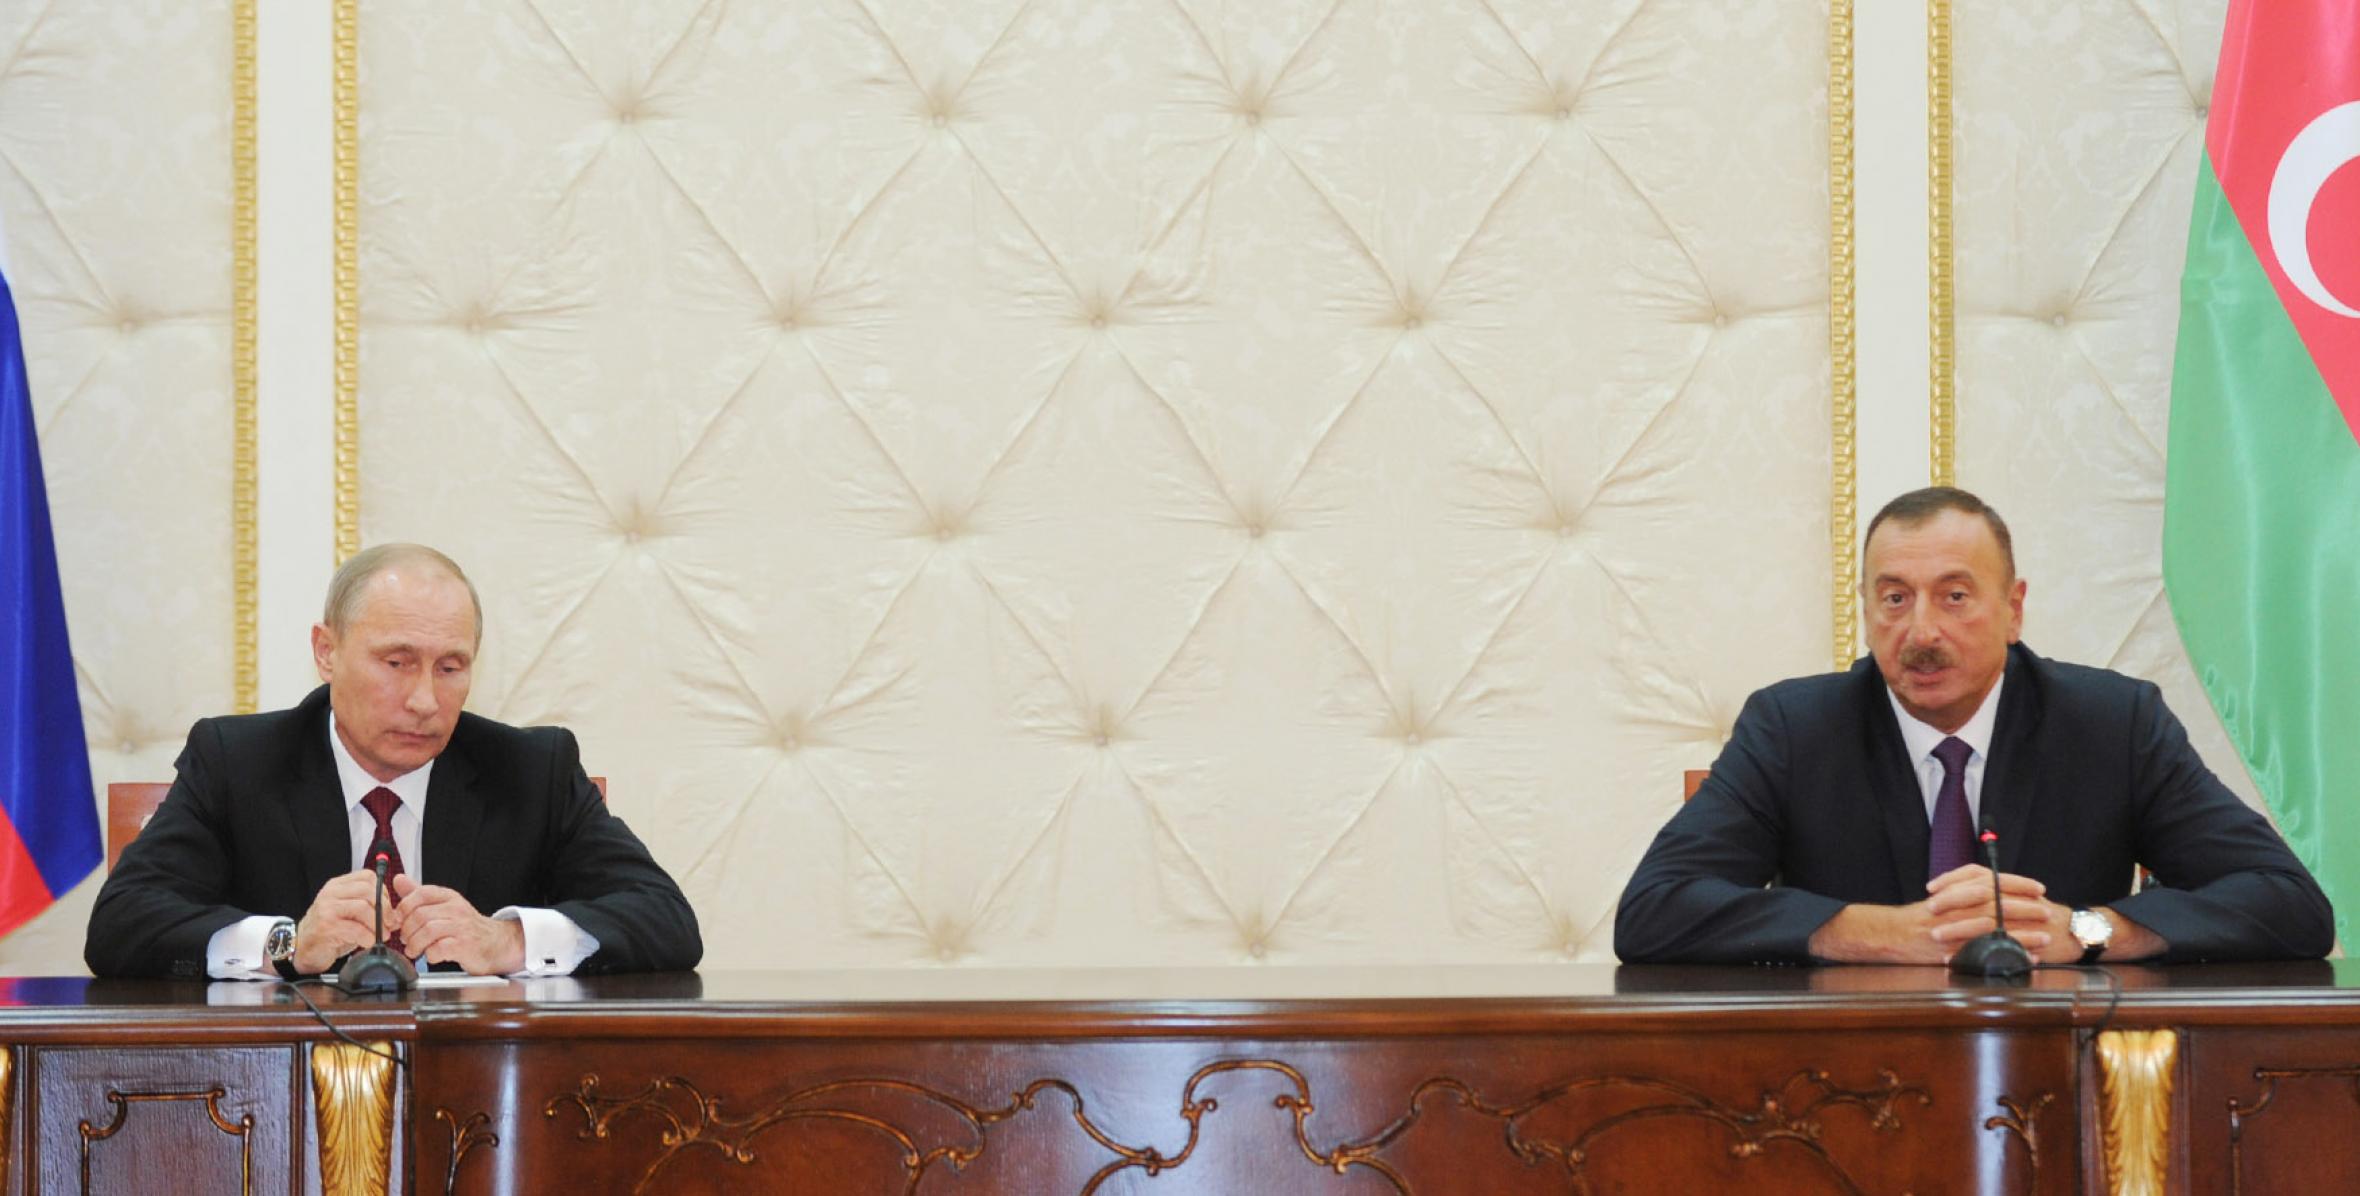 Ilham Aliyev and Russian President Vladimir Putin made statements